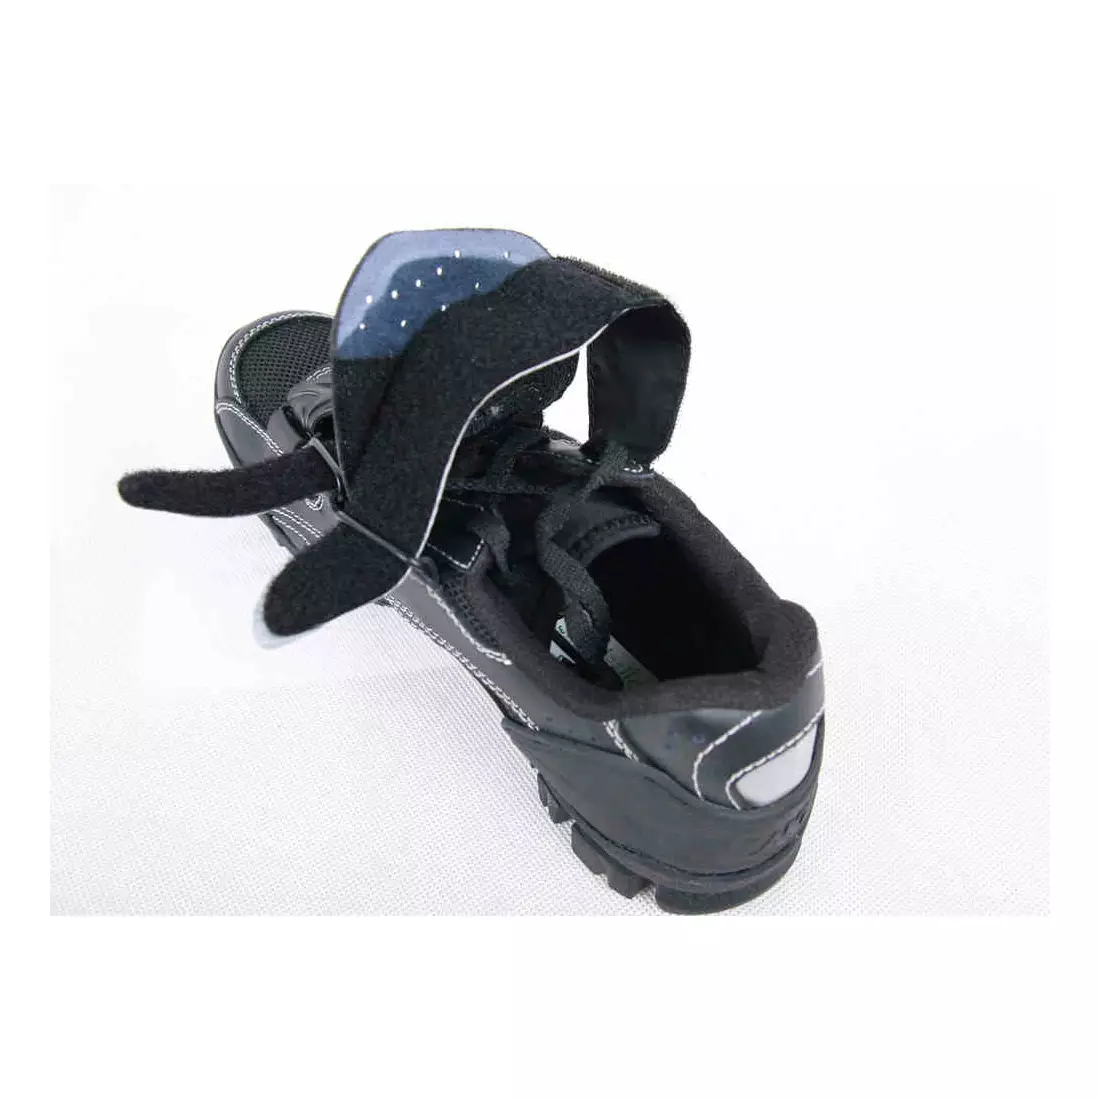 LAKE MX165 - pantofi de ciclism, VIBRAM